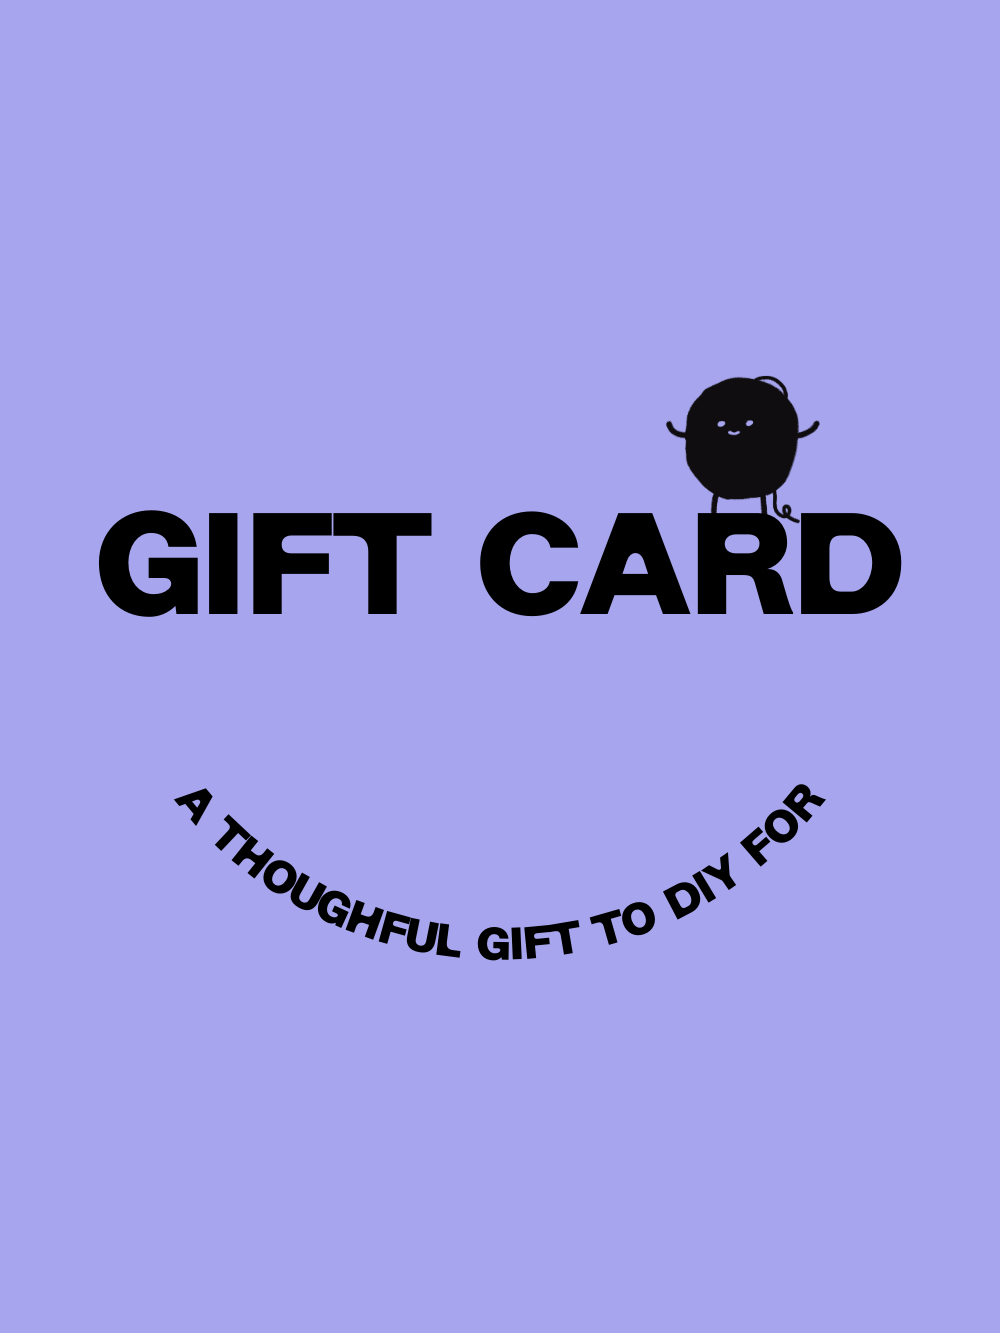 Cardigang Digital Gift Card